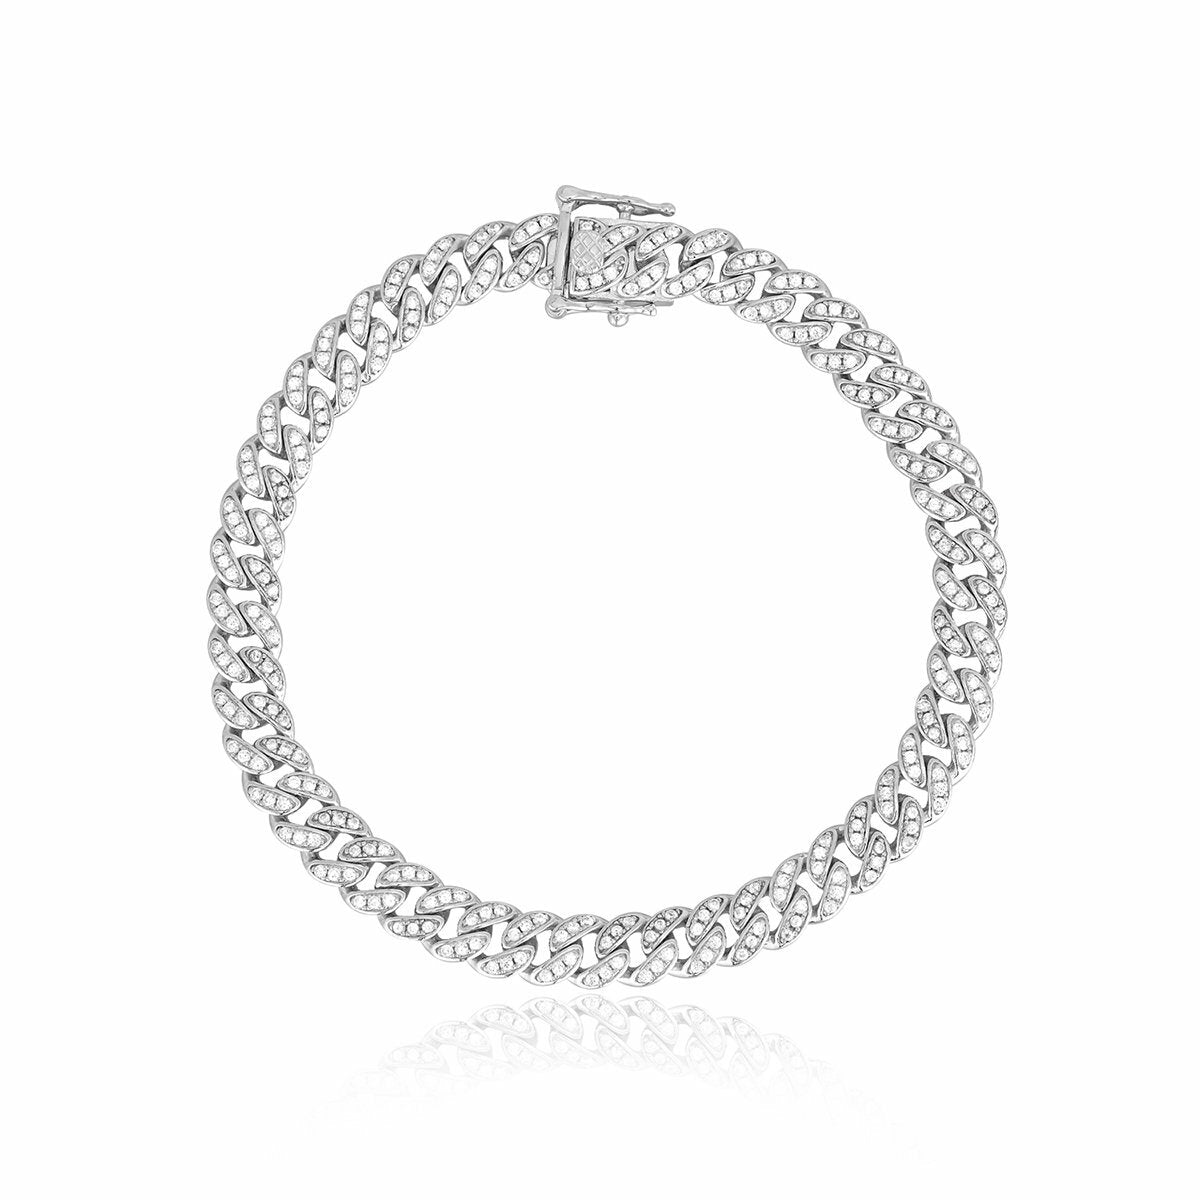 Groumette Bracelet in Silver Mabina Gioielli
 533334-M